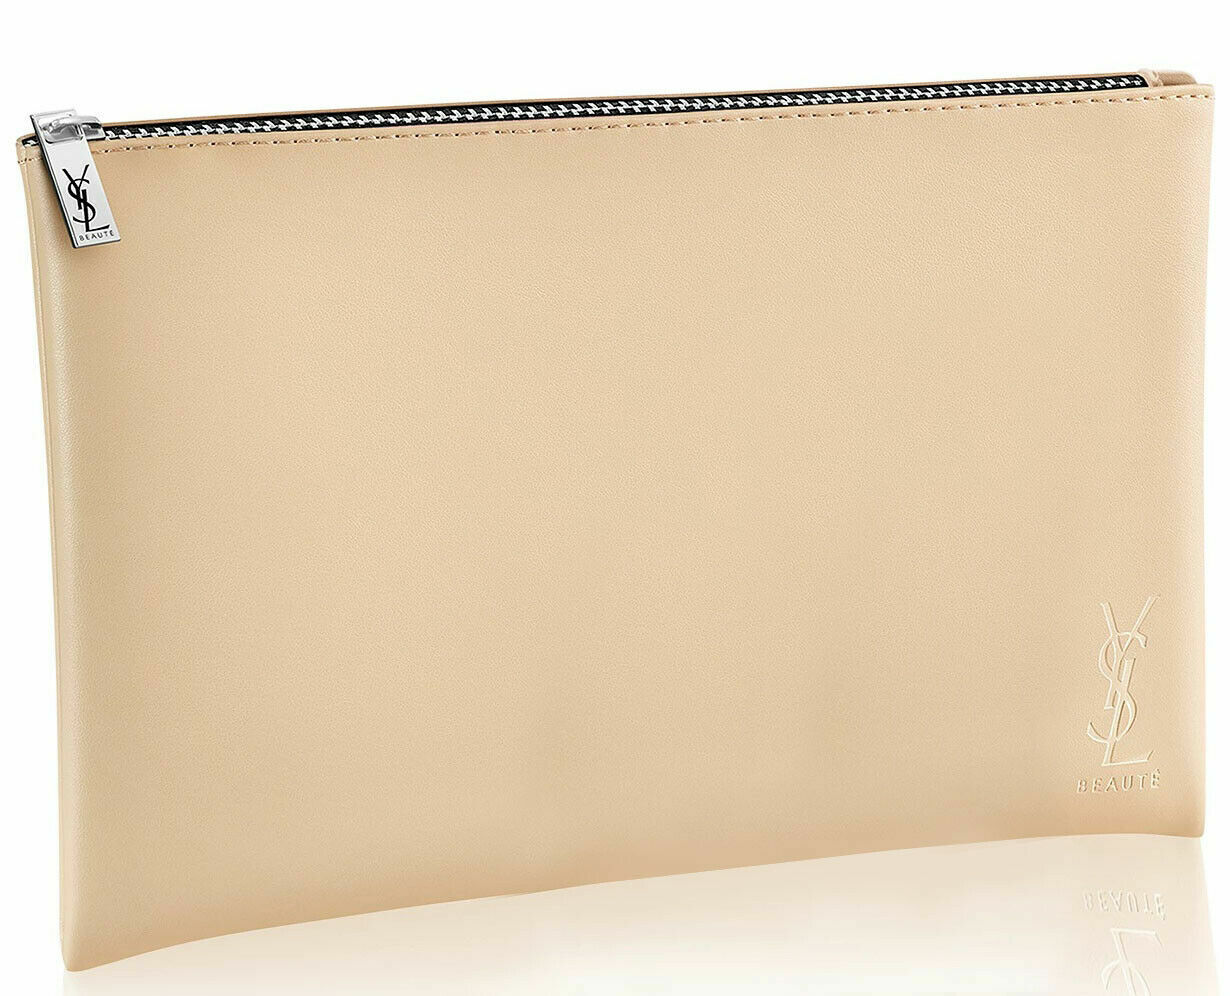 Yves Saint Laurent Beauty/Makeup Travel Bag Limited Edition